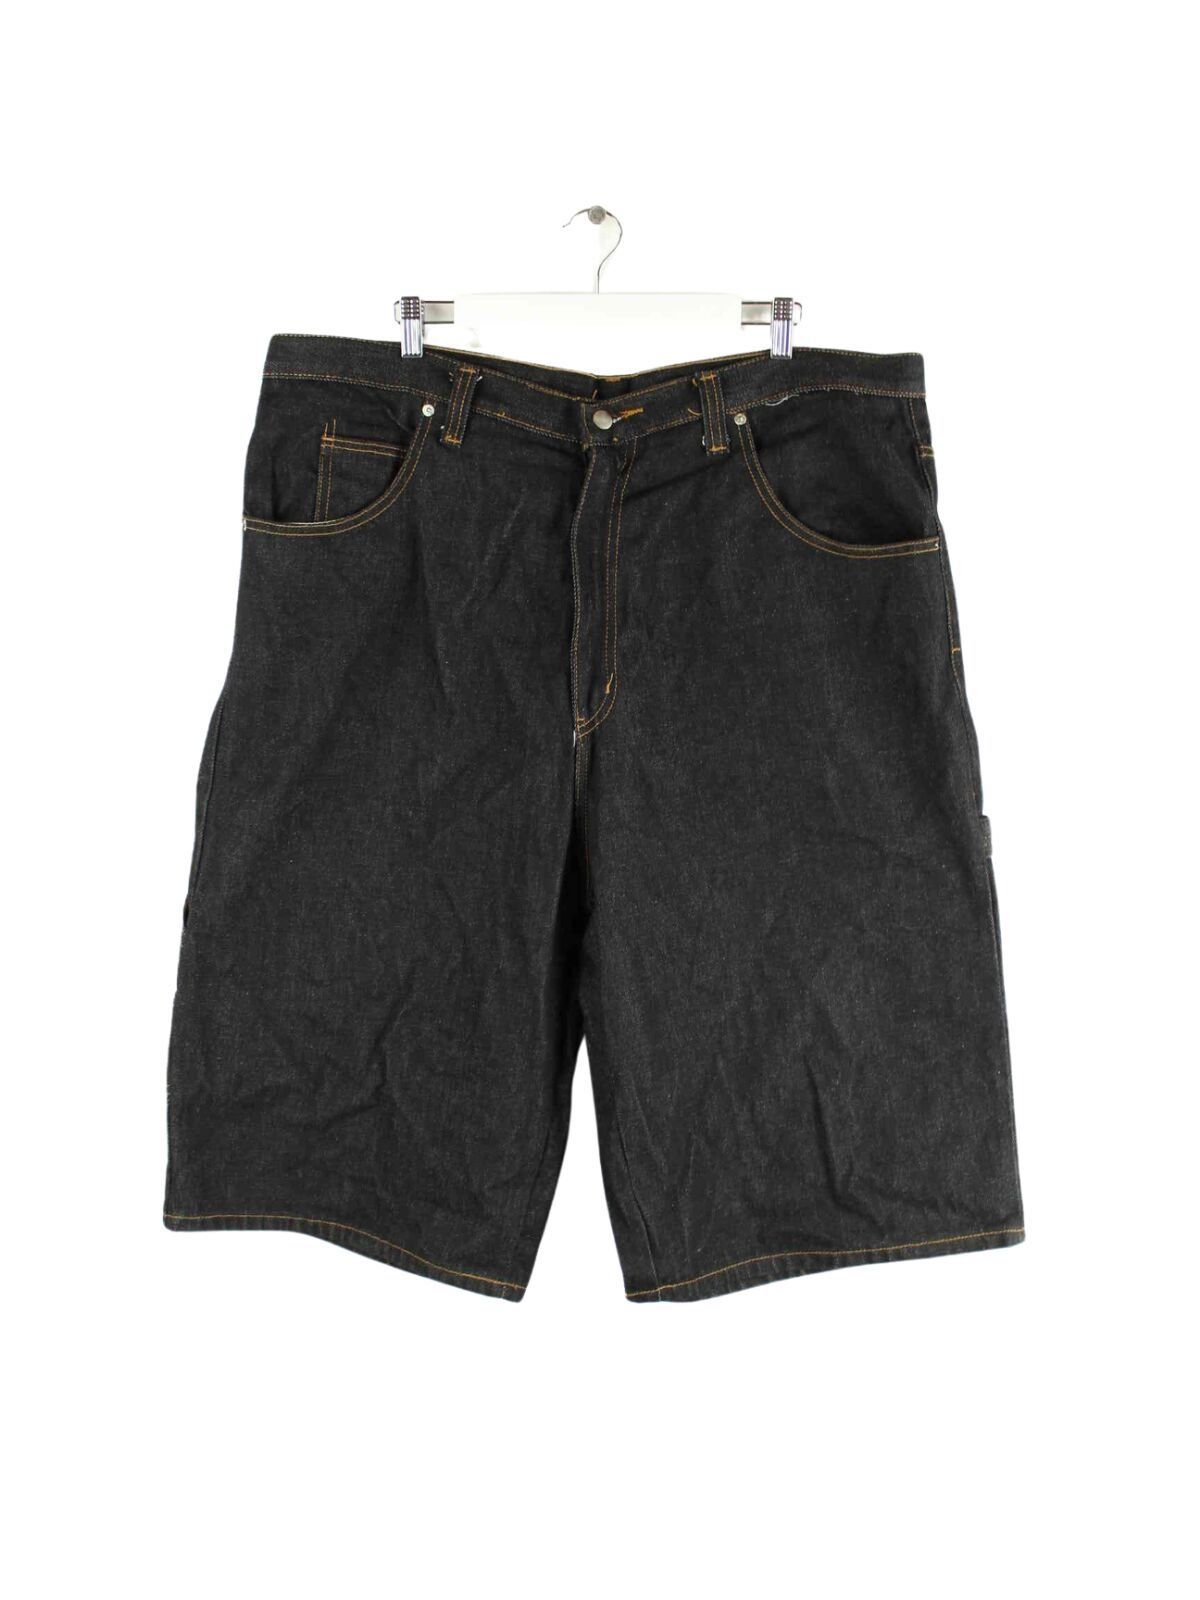 Sean John 90s Vintage Carpenter Jorts / Jeans Shorts Grau W42 (back image)